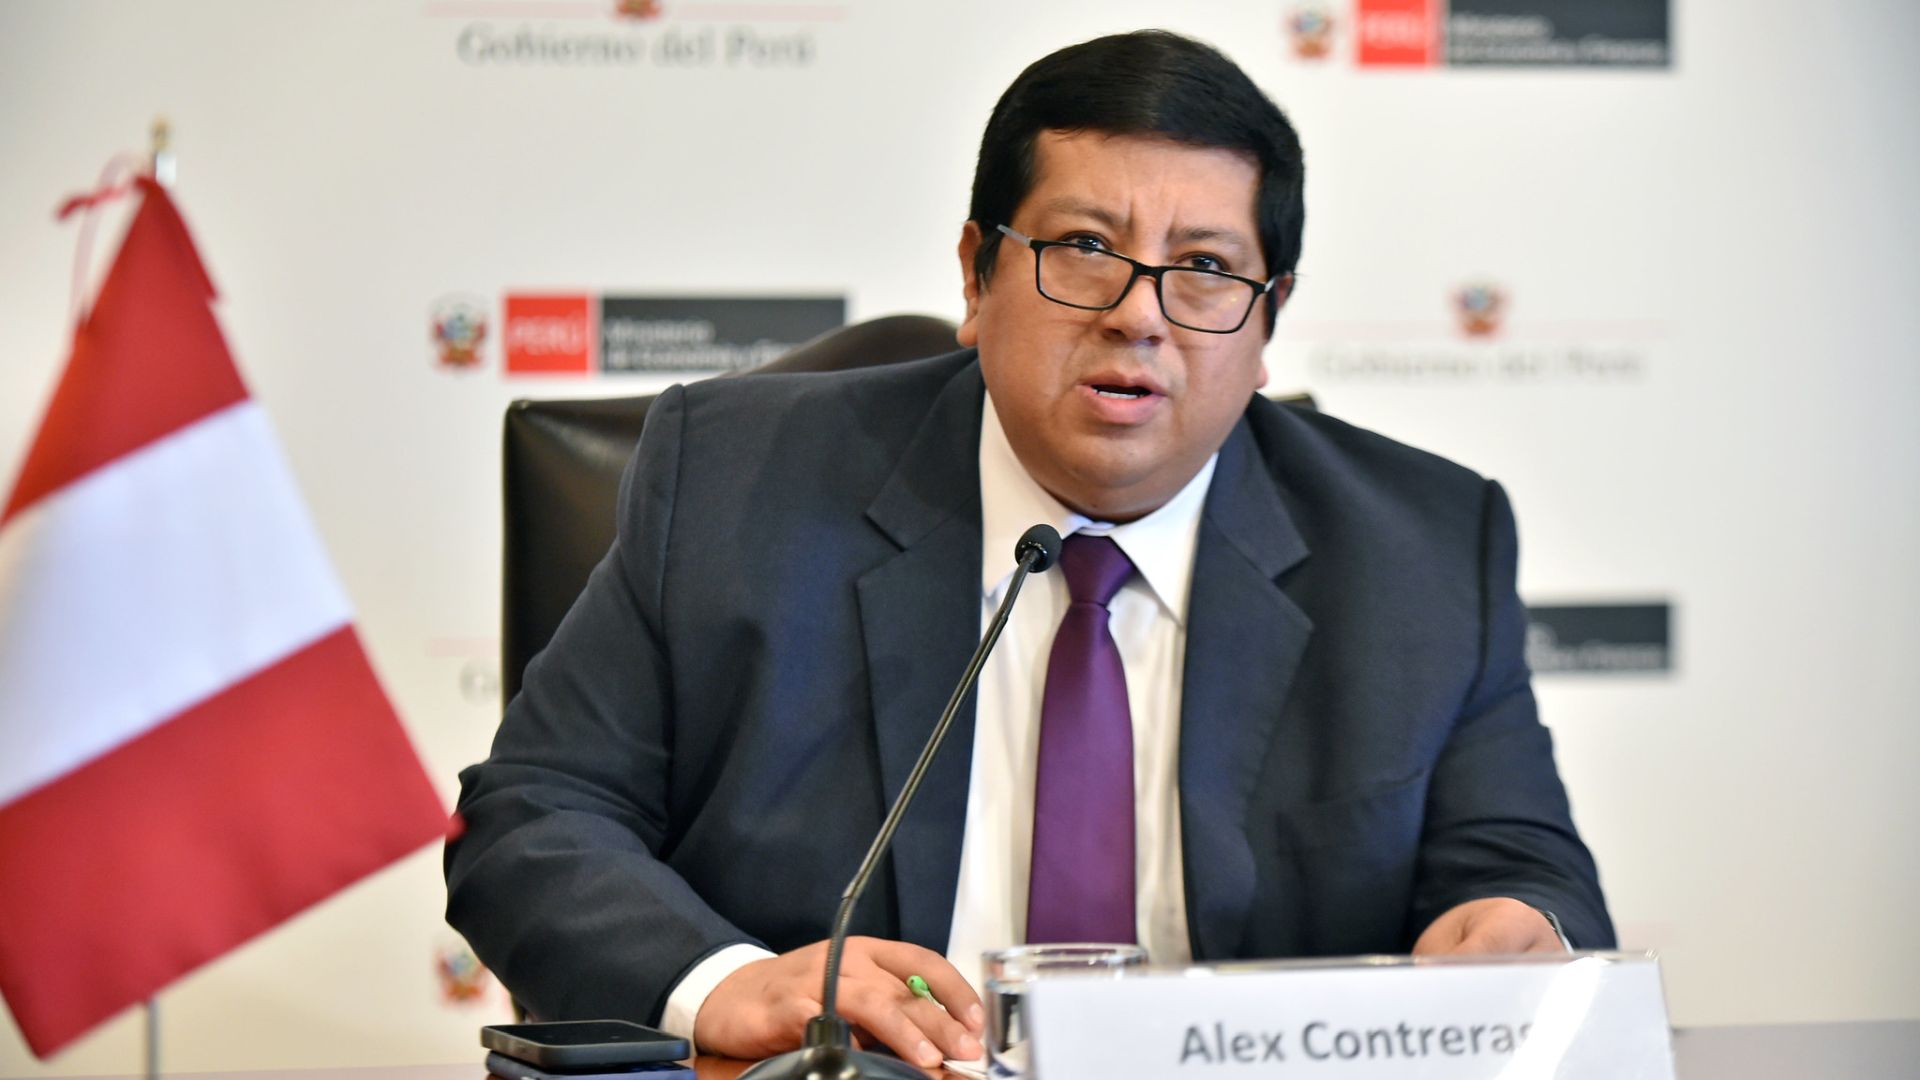 Alex Contreras, Minister of Economy and Finance